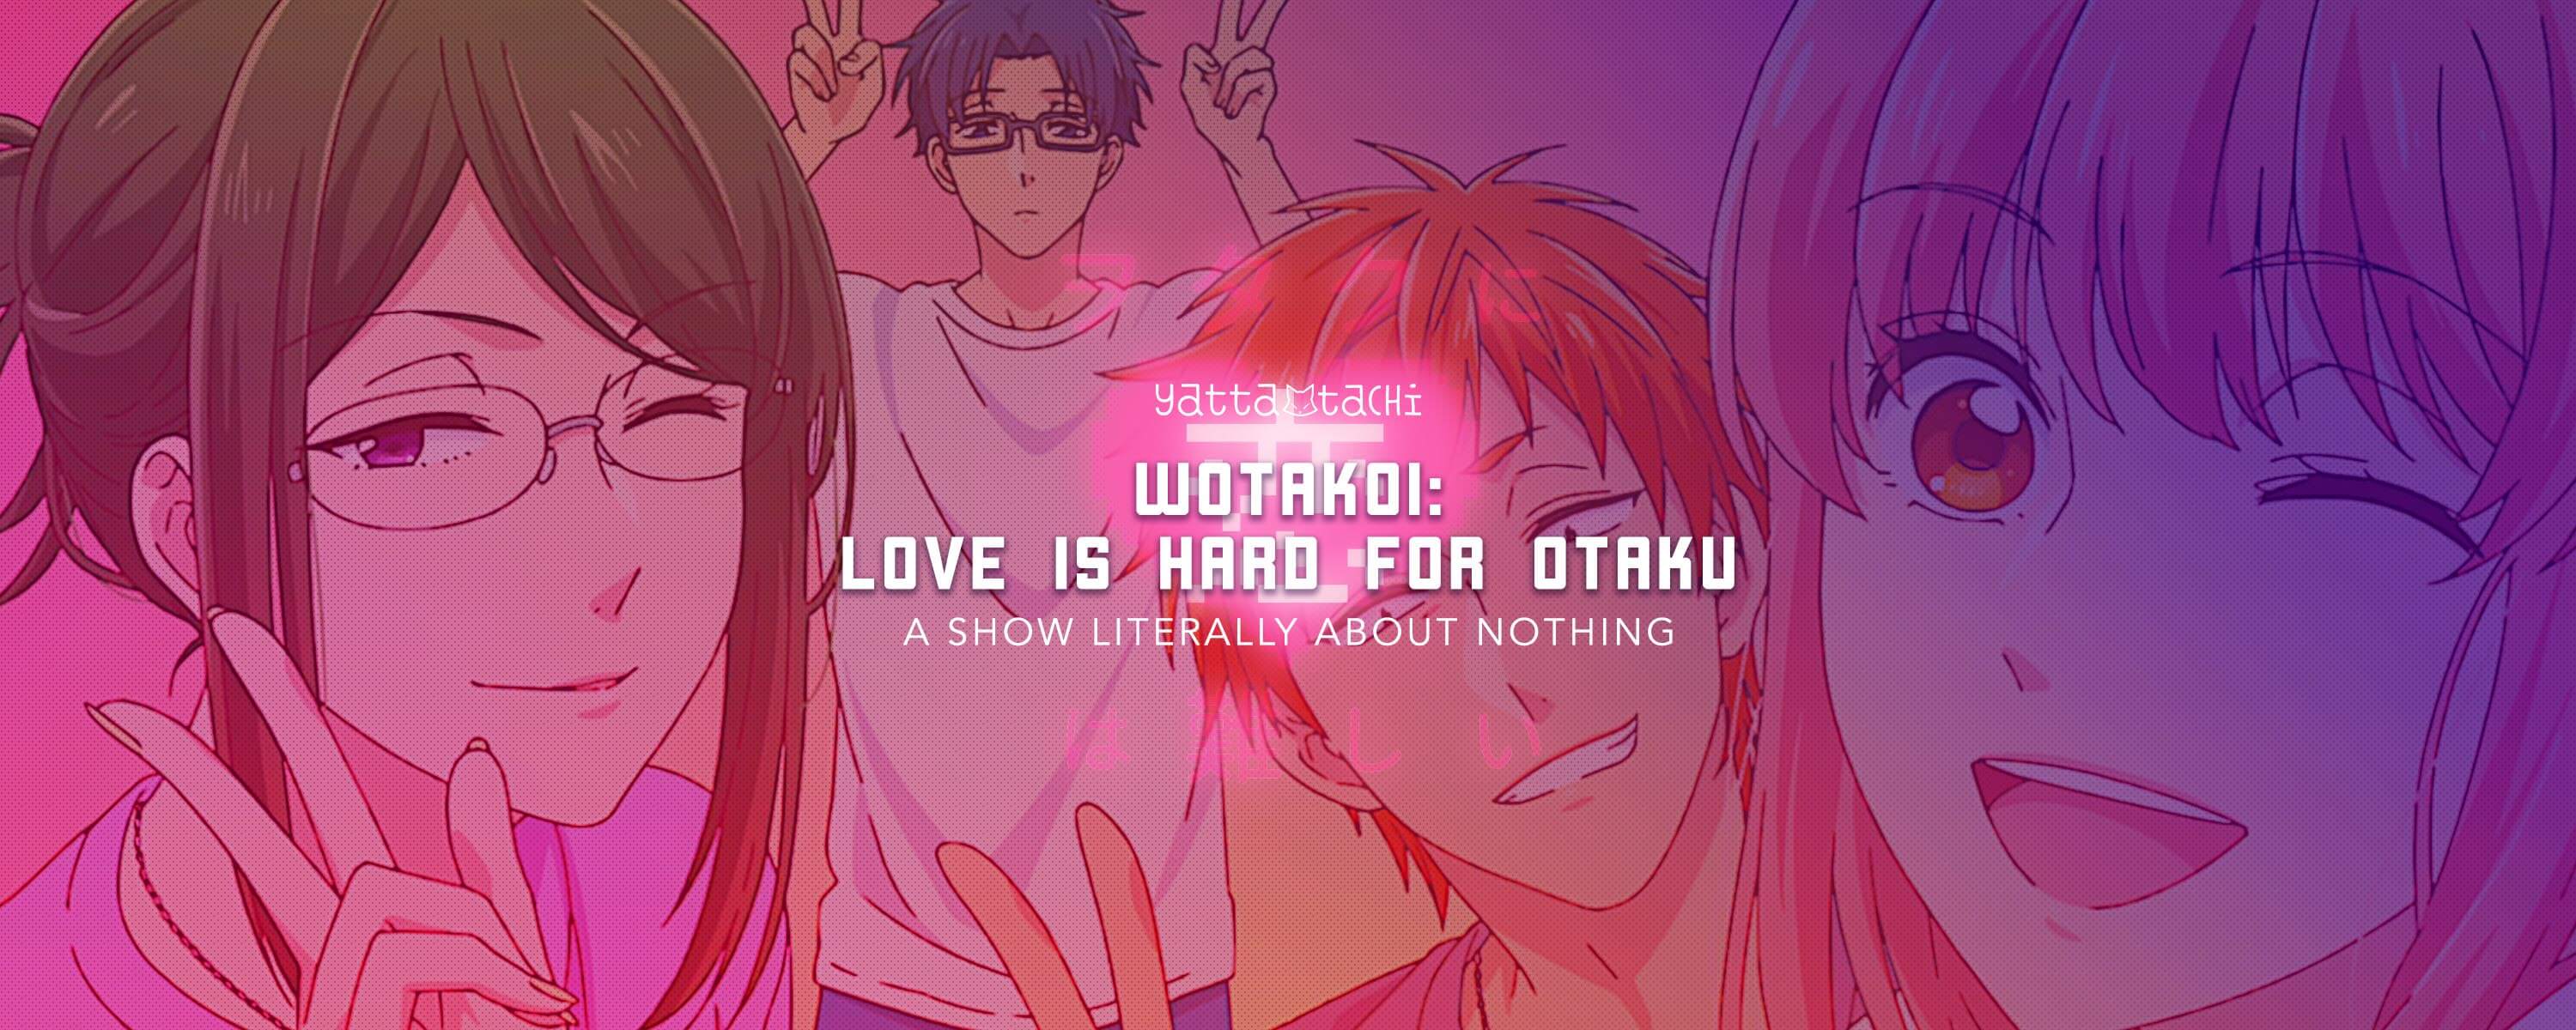 Wotakoi: Love Is Hard for Otaku to End This Summer